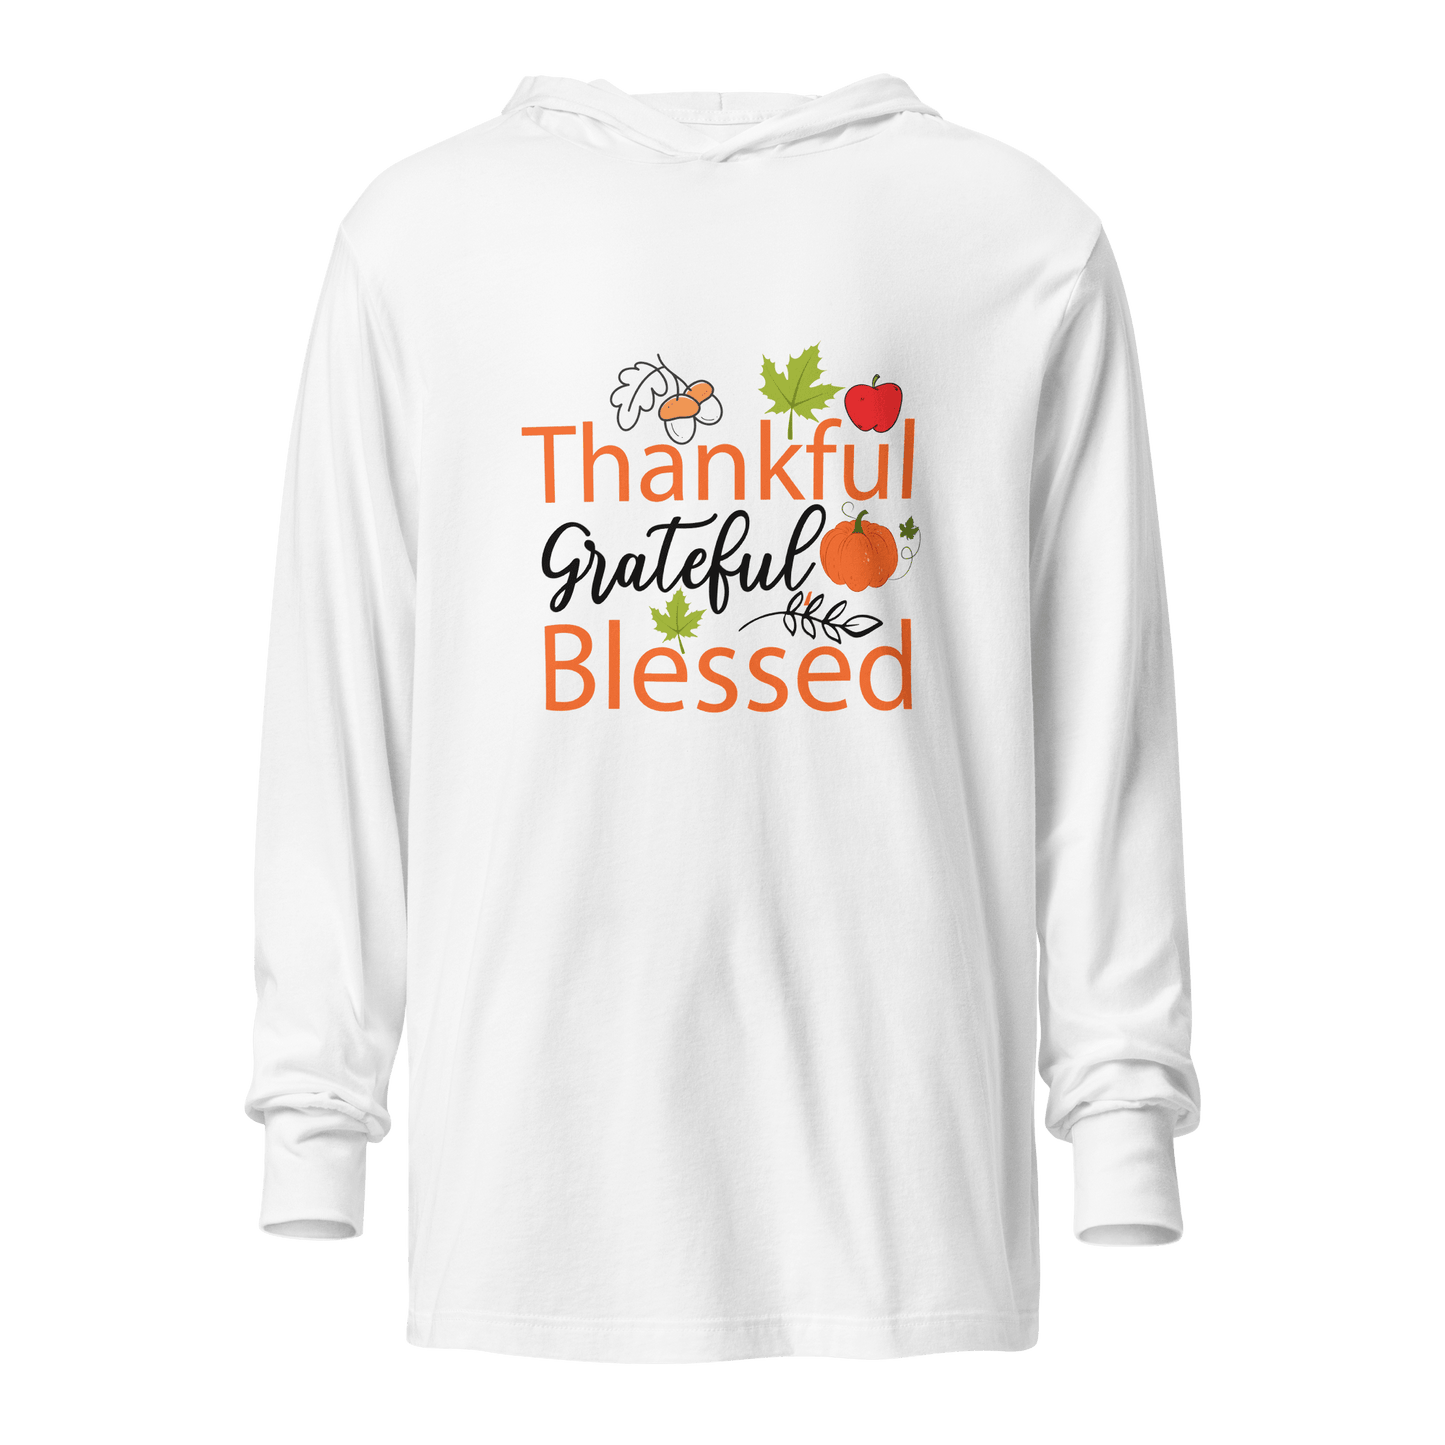 Thankful Grateful Blessed Hooded long-sleeve tee